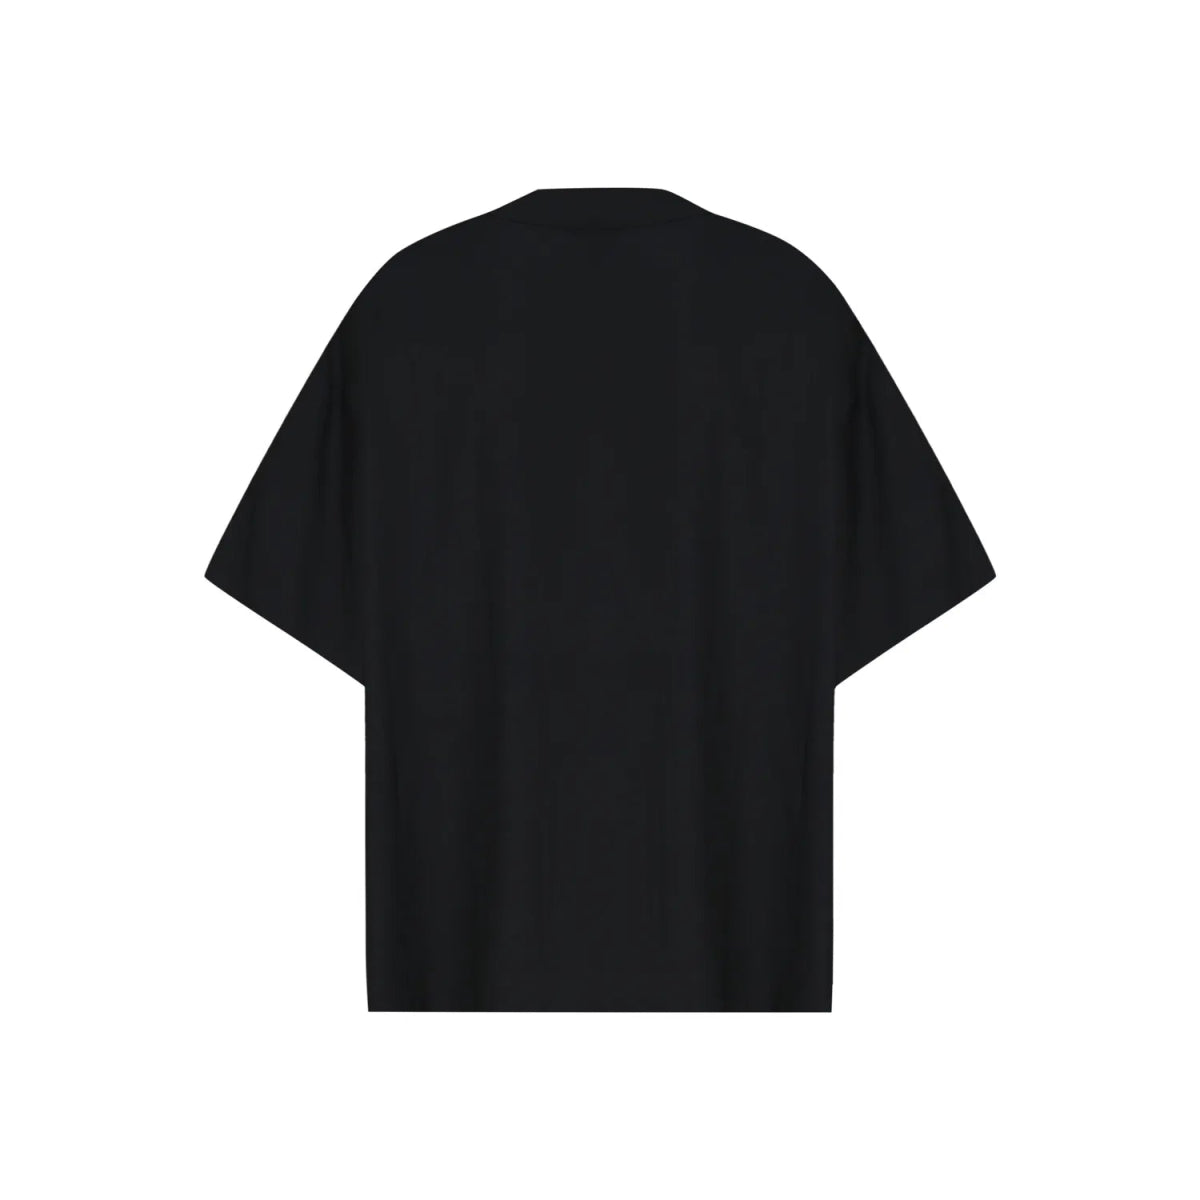 SARGONAS Unisex Oversize Shirt - Black - sabbia